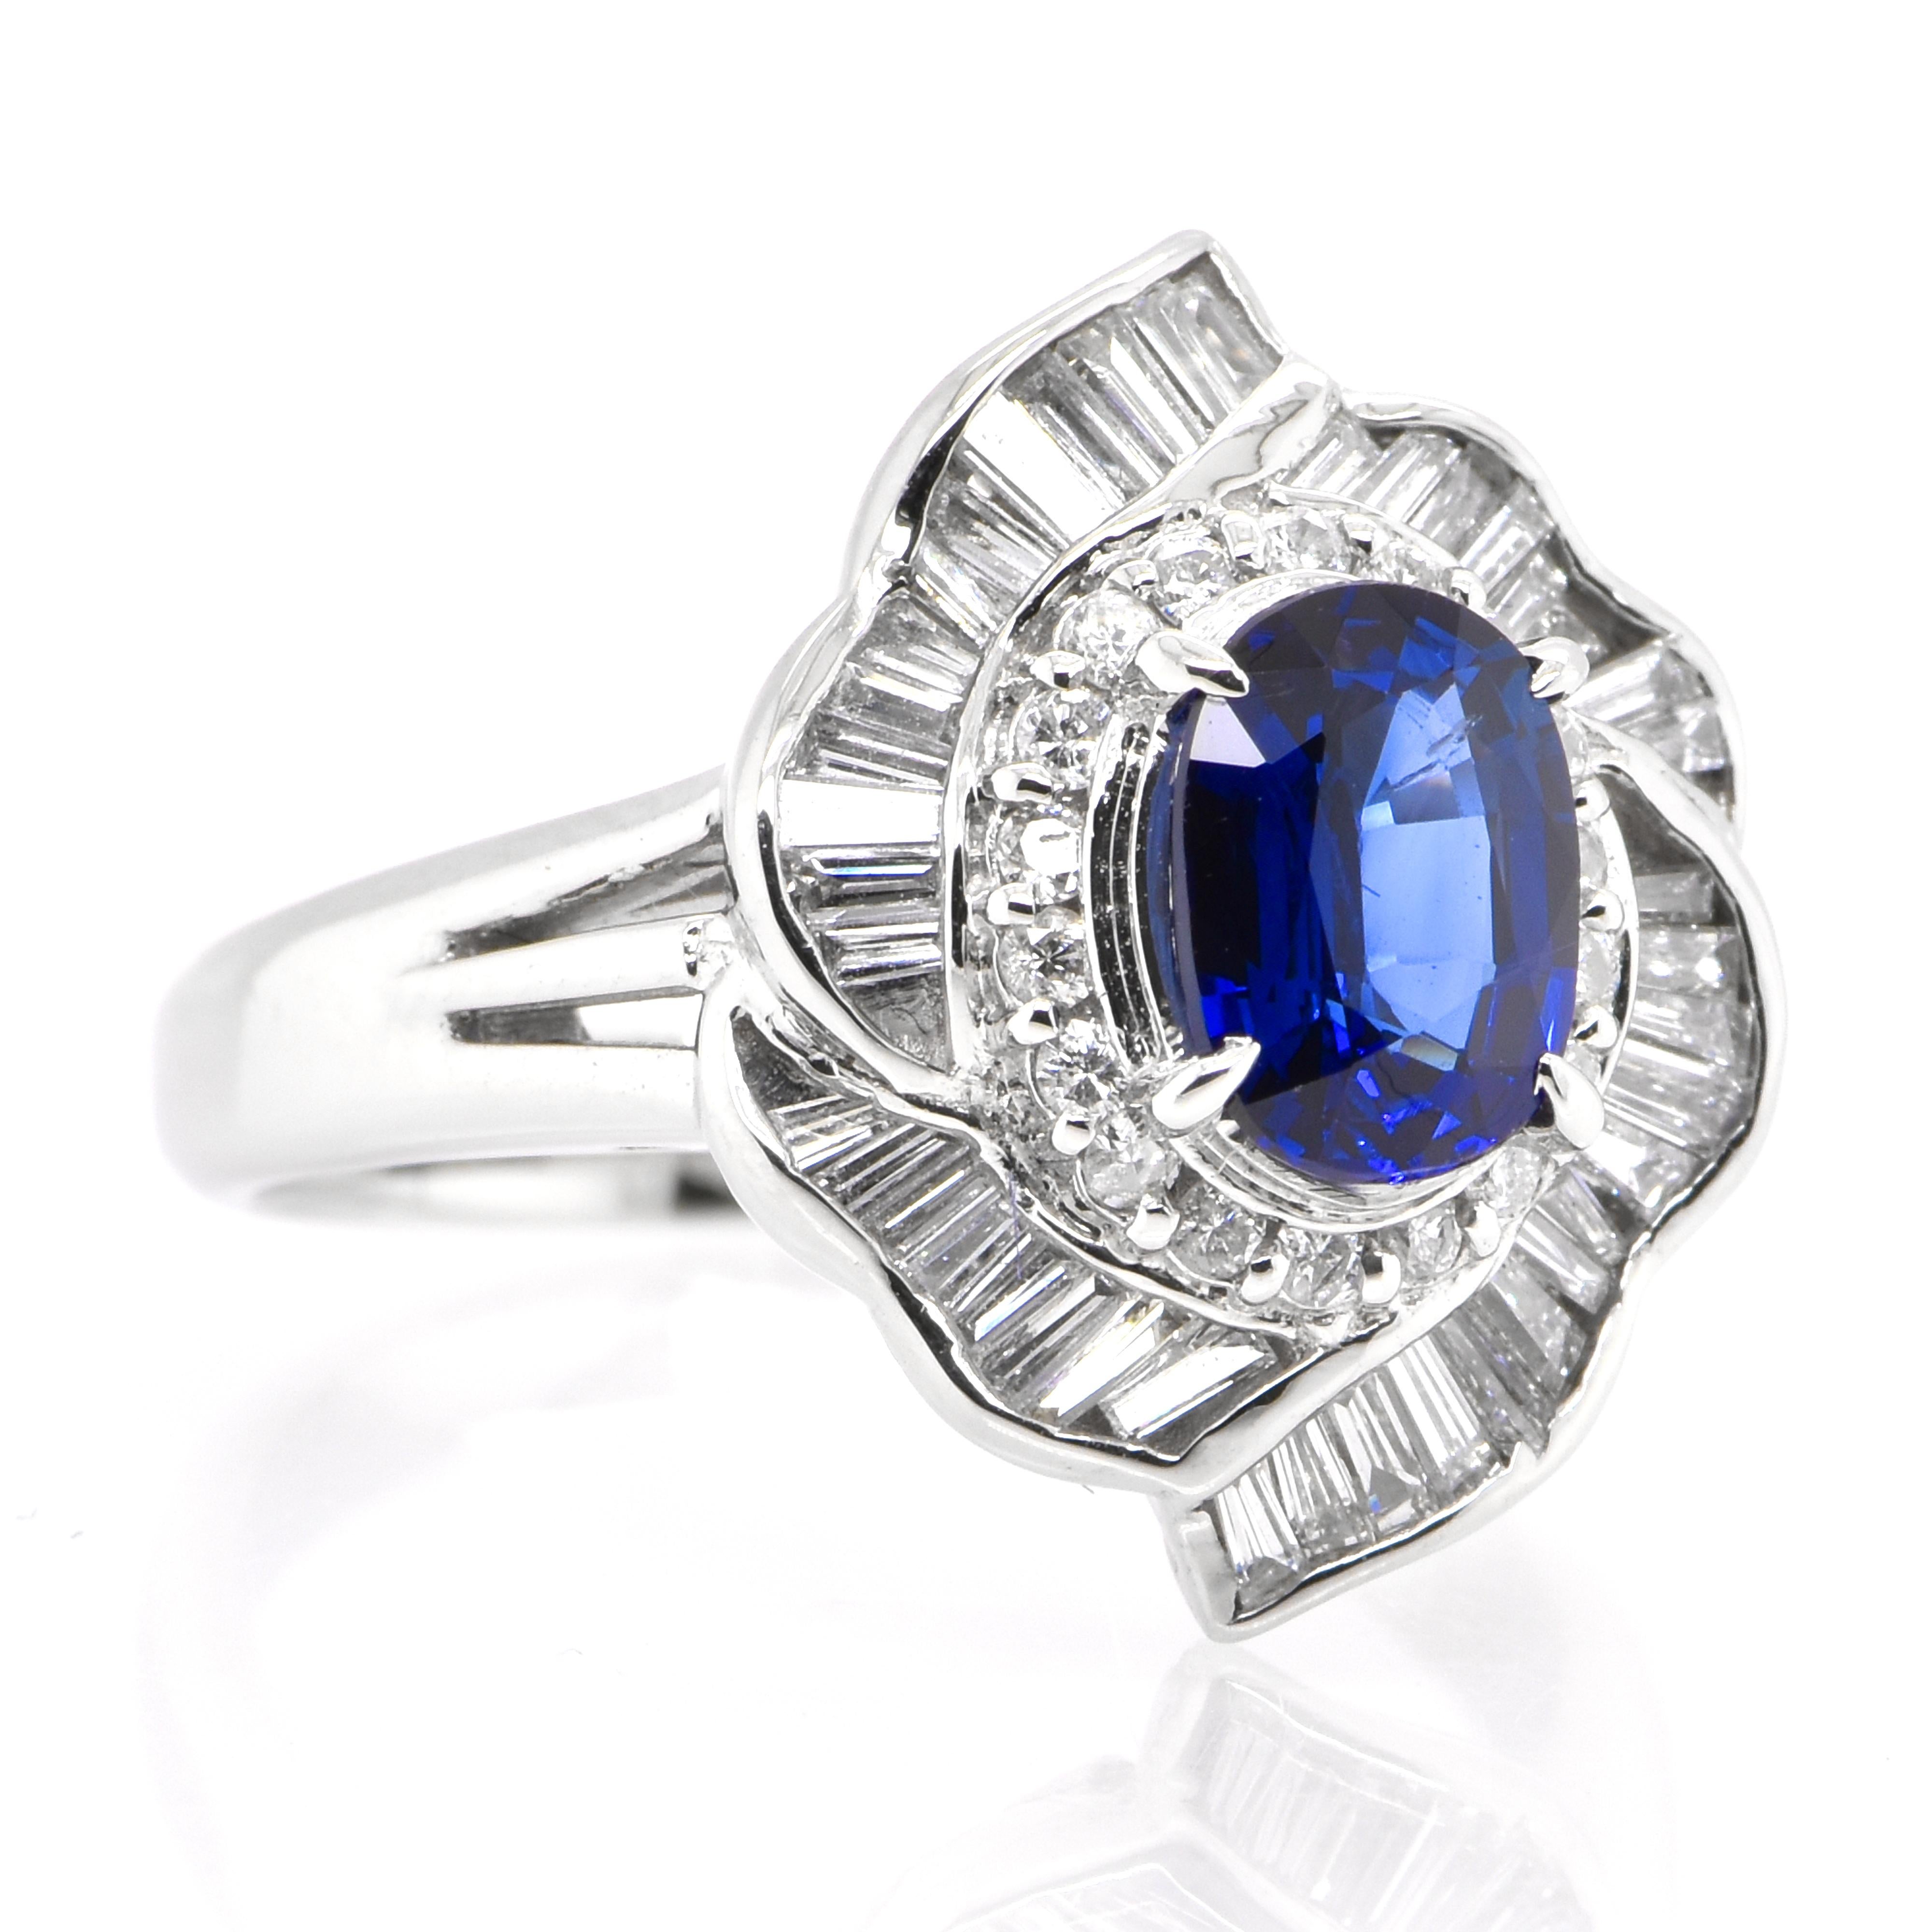 Modern 1.28 Carat Natural Sapphire and Diamond Vintage Ring Set in Platinum